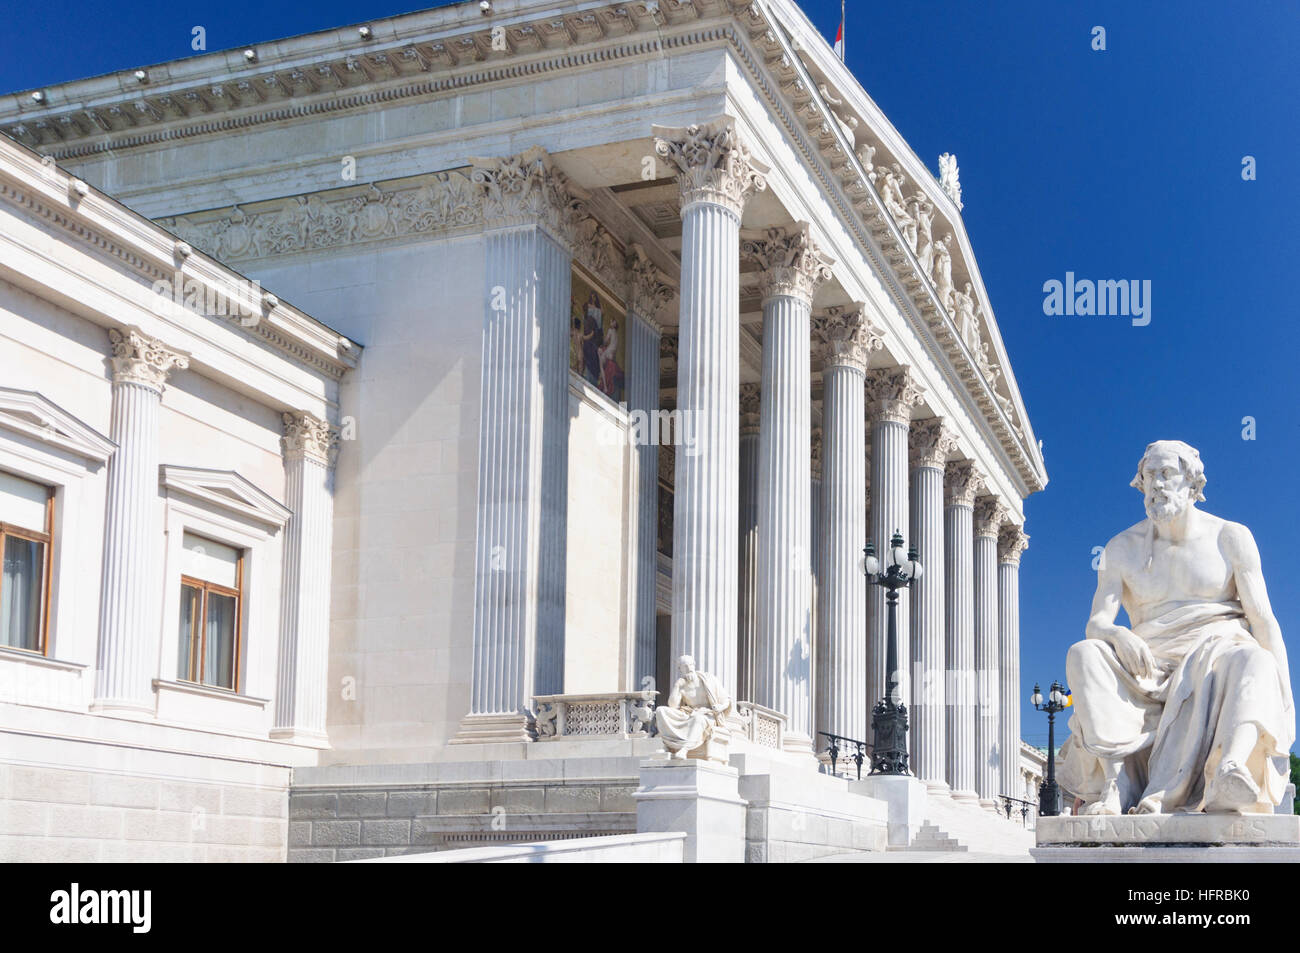 Wien, Vienna: Parliament buildings with statues of Roman historians, Wien, Austria Stock Photo